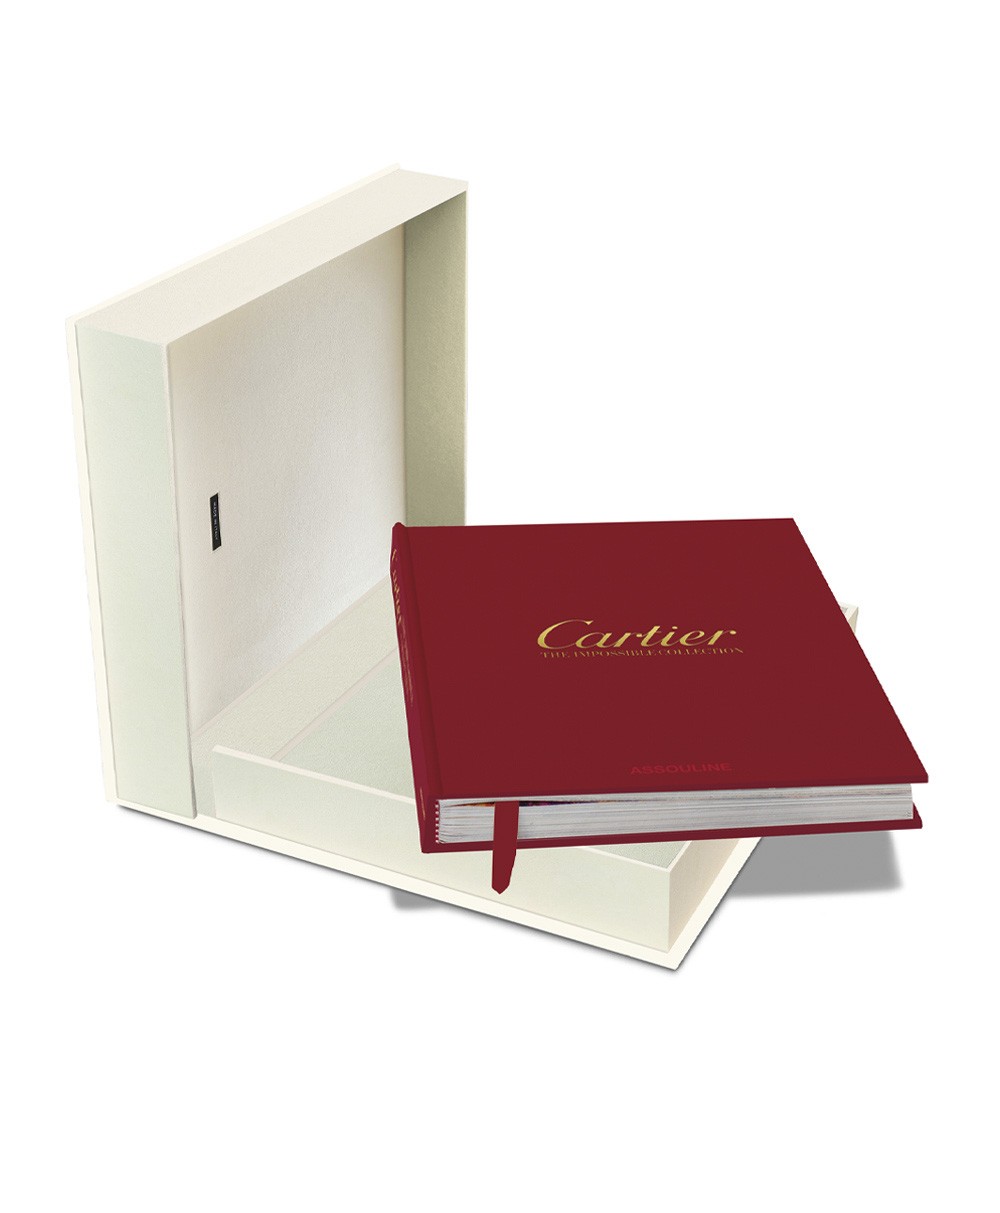 Verpackung des Bildbands „Cartier: The Impossible Collection“ von Assouline im RAUM concept store 